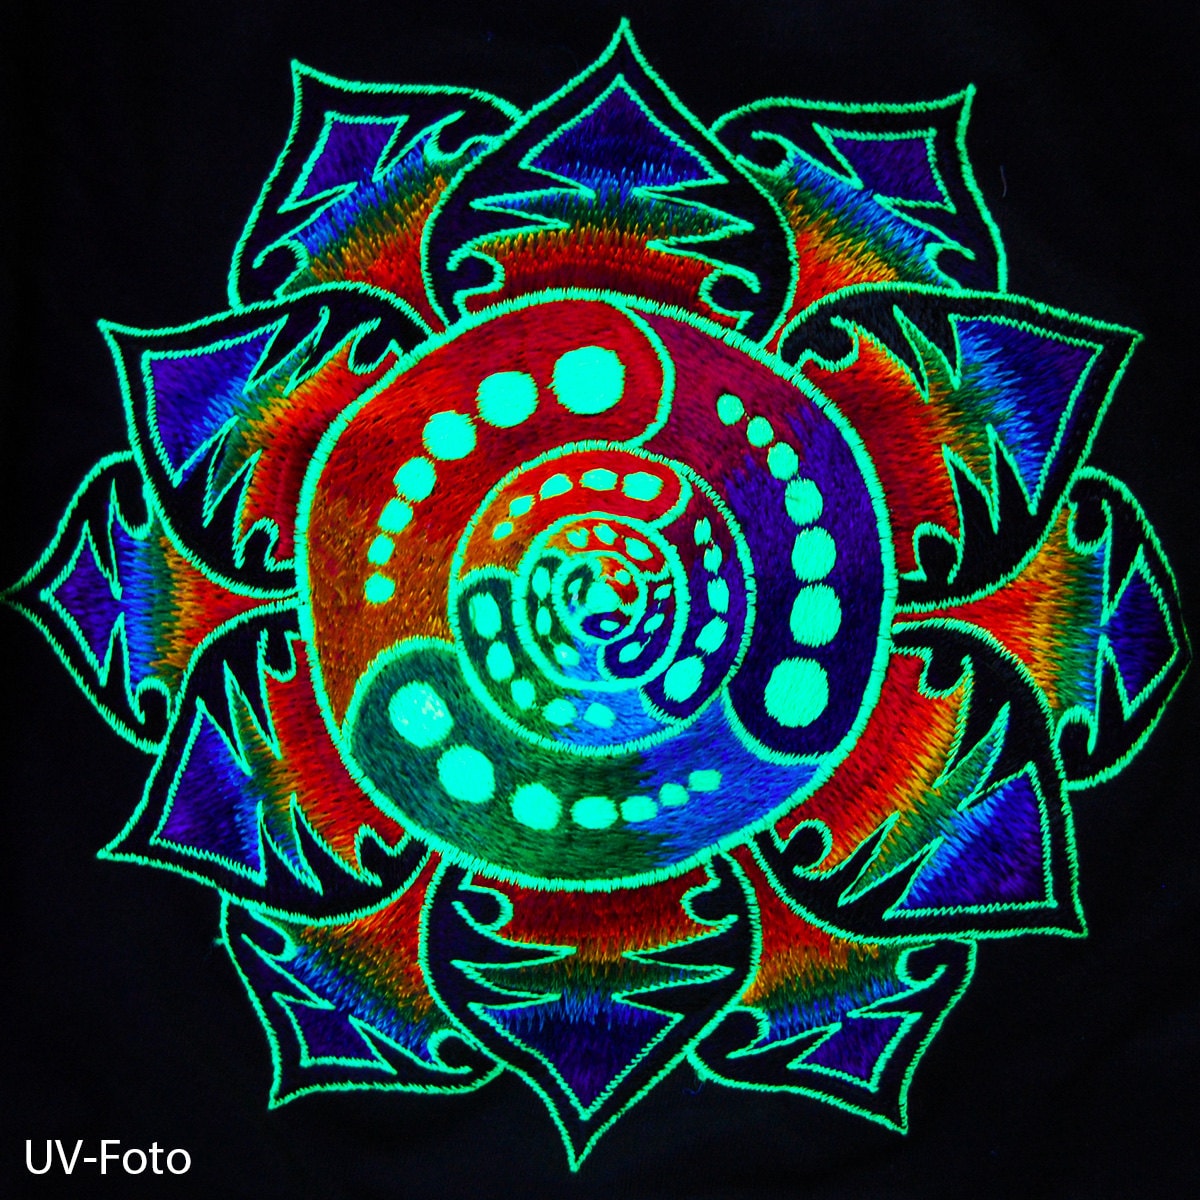 Attributes crop circle T-Shirt rainbow mandala blacklight handmade embroidery no print psy goa t-shirt